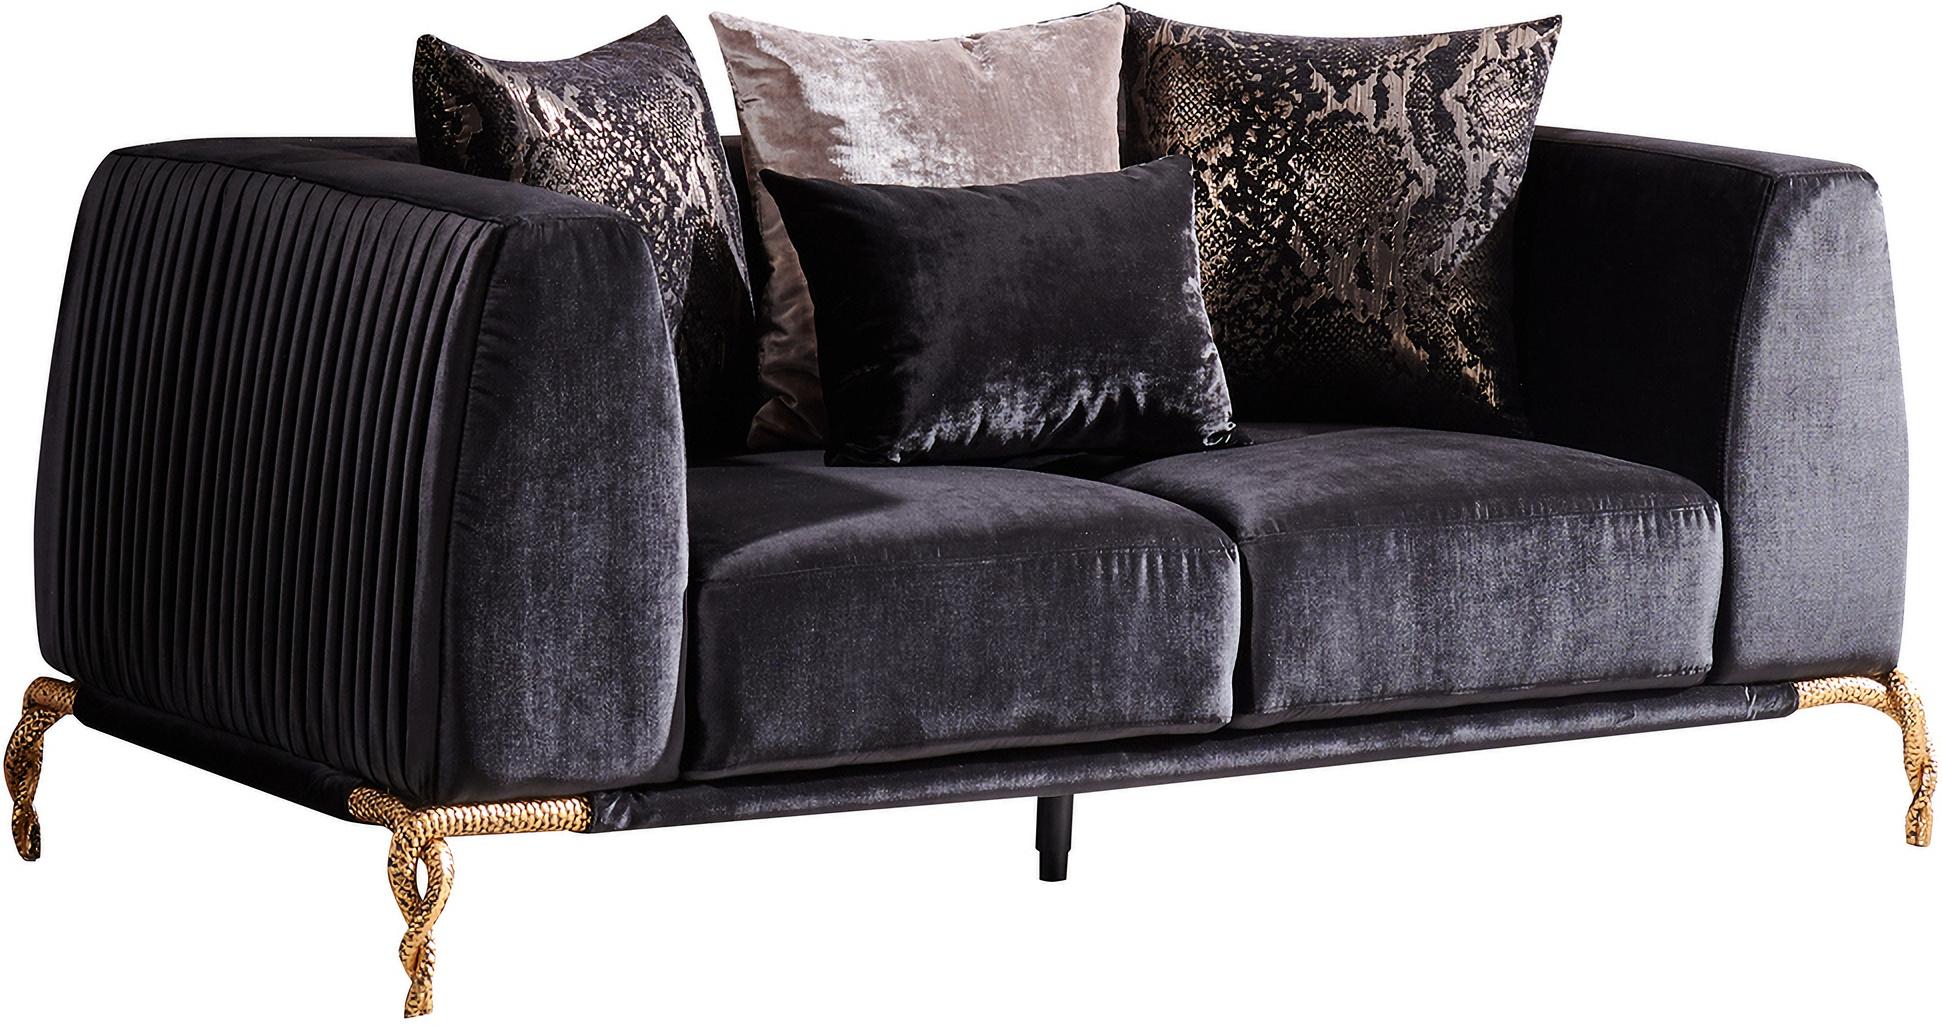 

    
Majestic-S-2PC Galaxy Home Furniture Sofa Set
